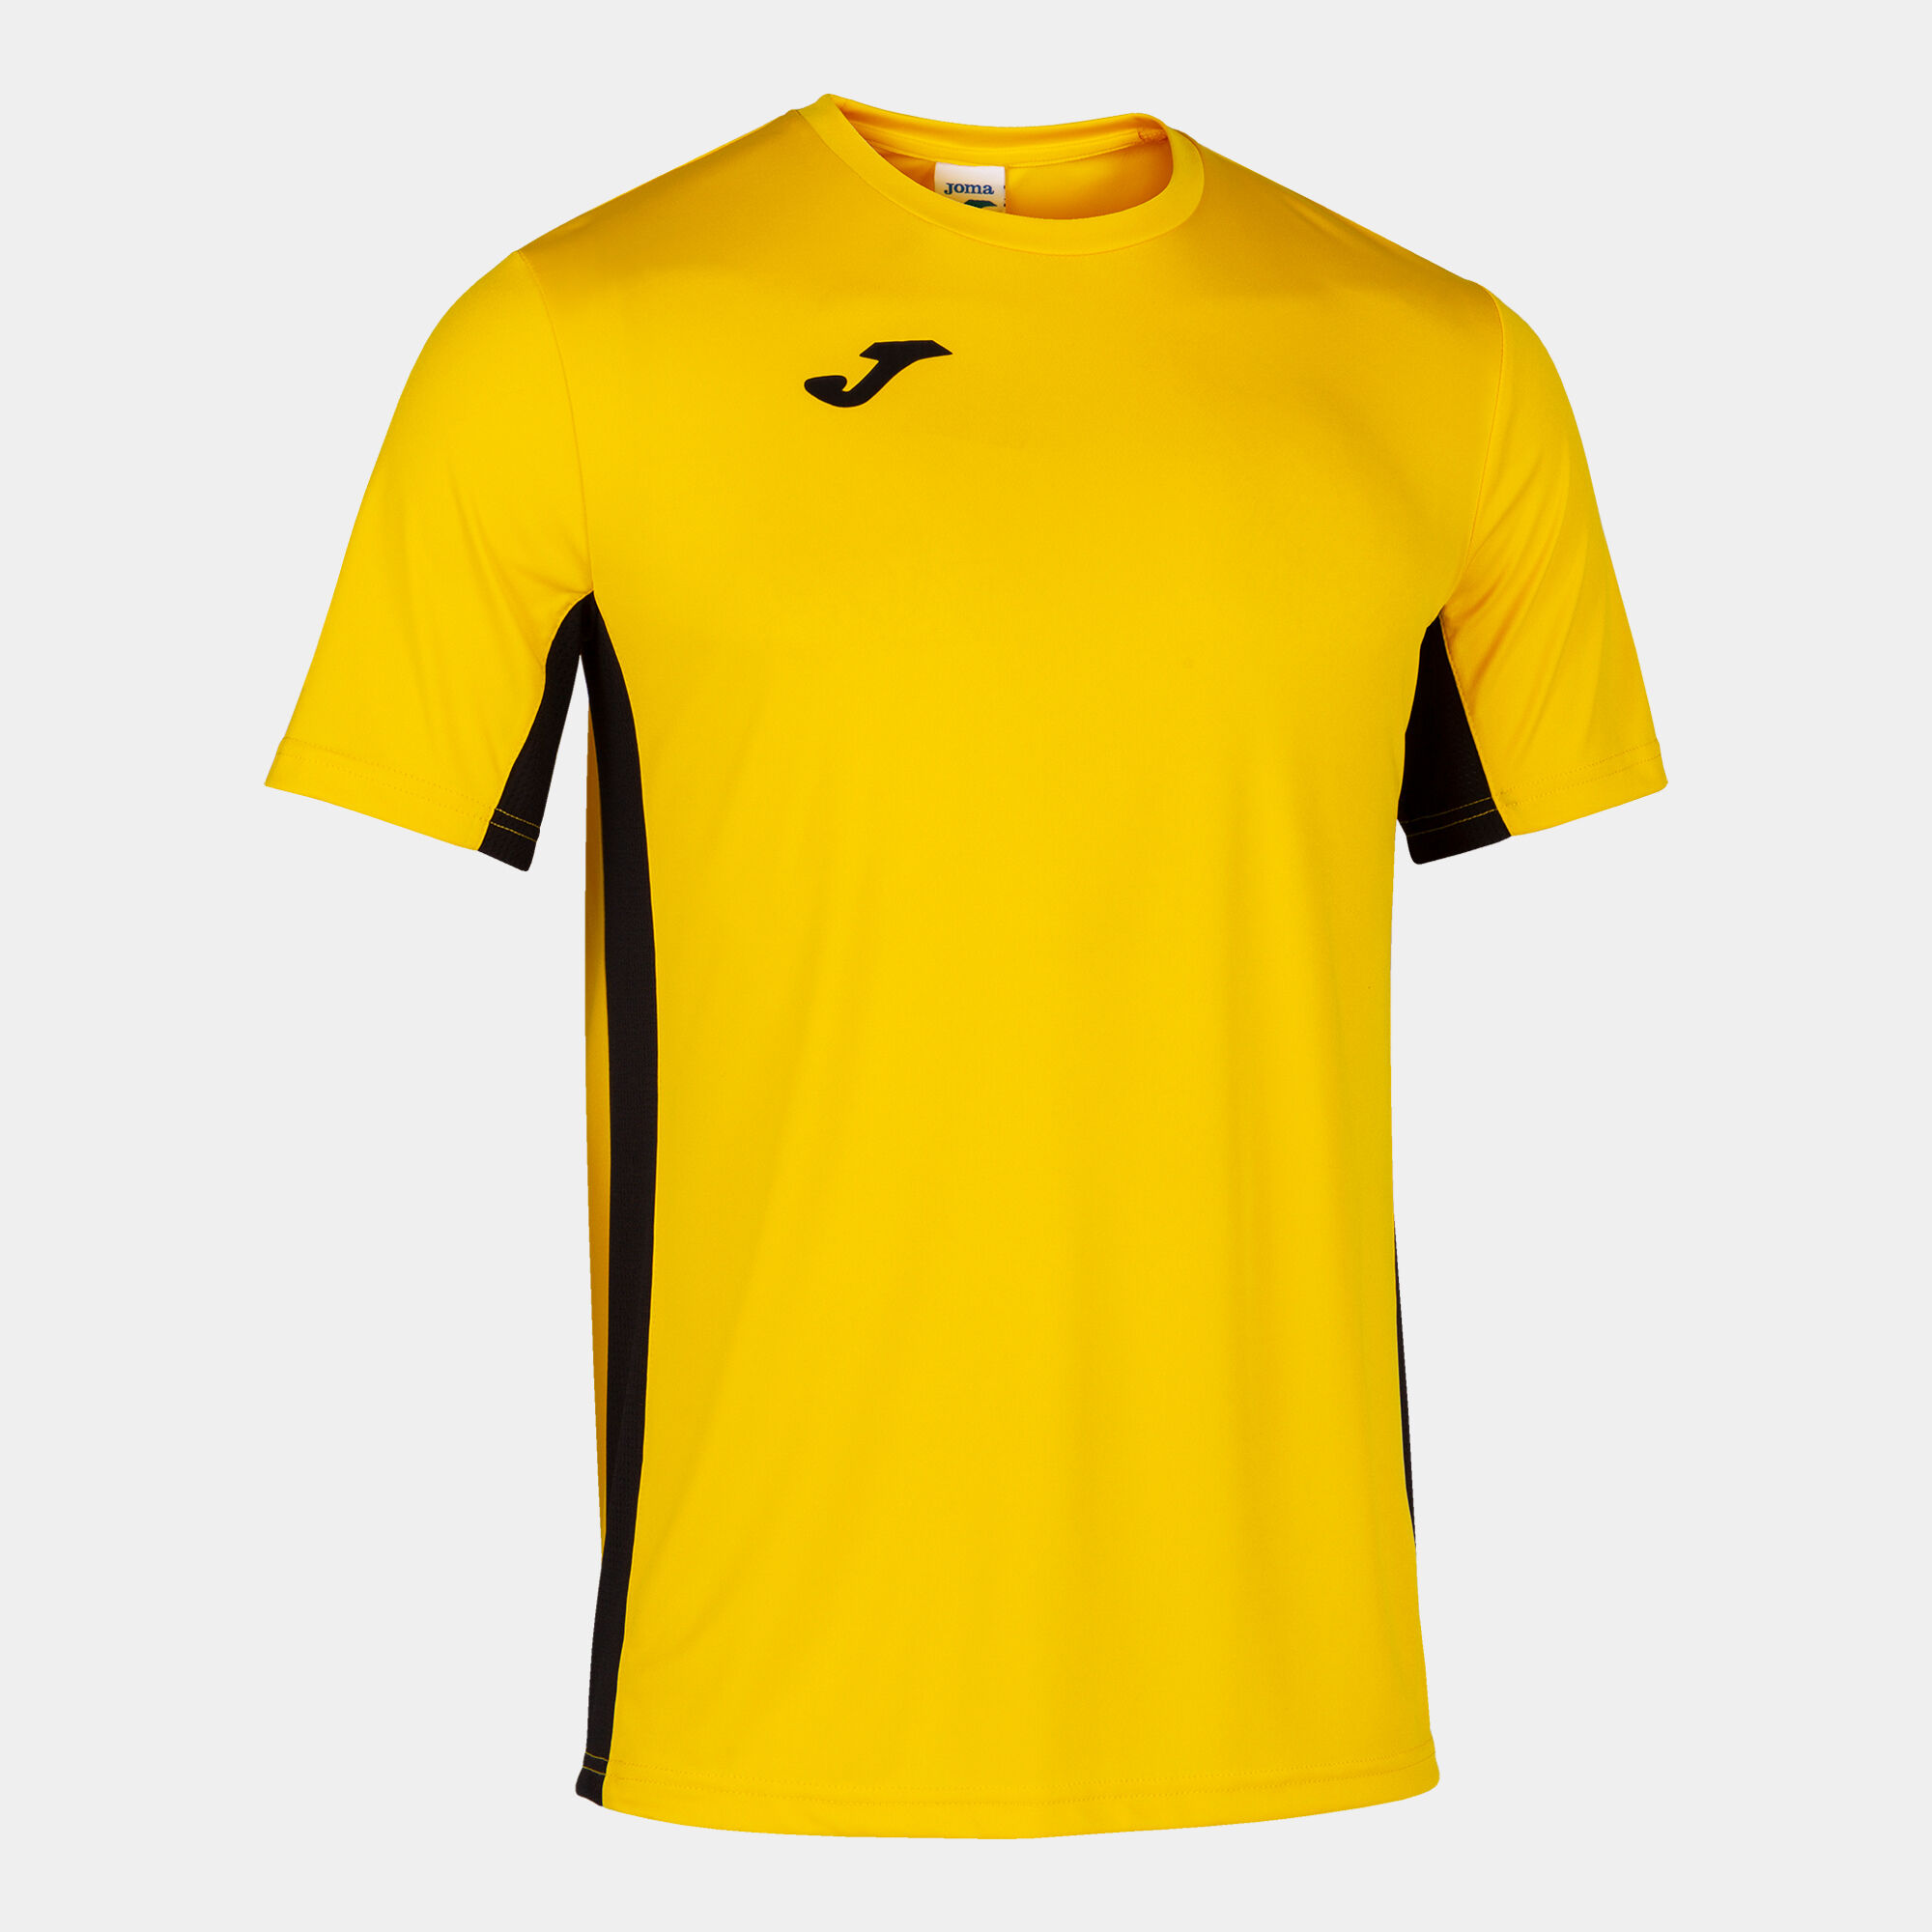 Camiseta manga corta hombre Cosenza amarillo negro